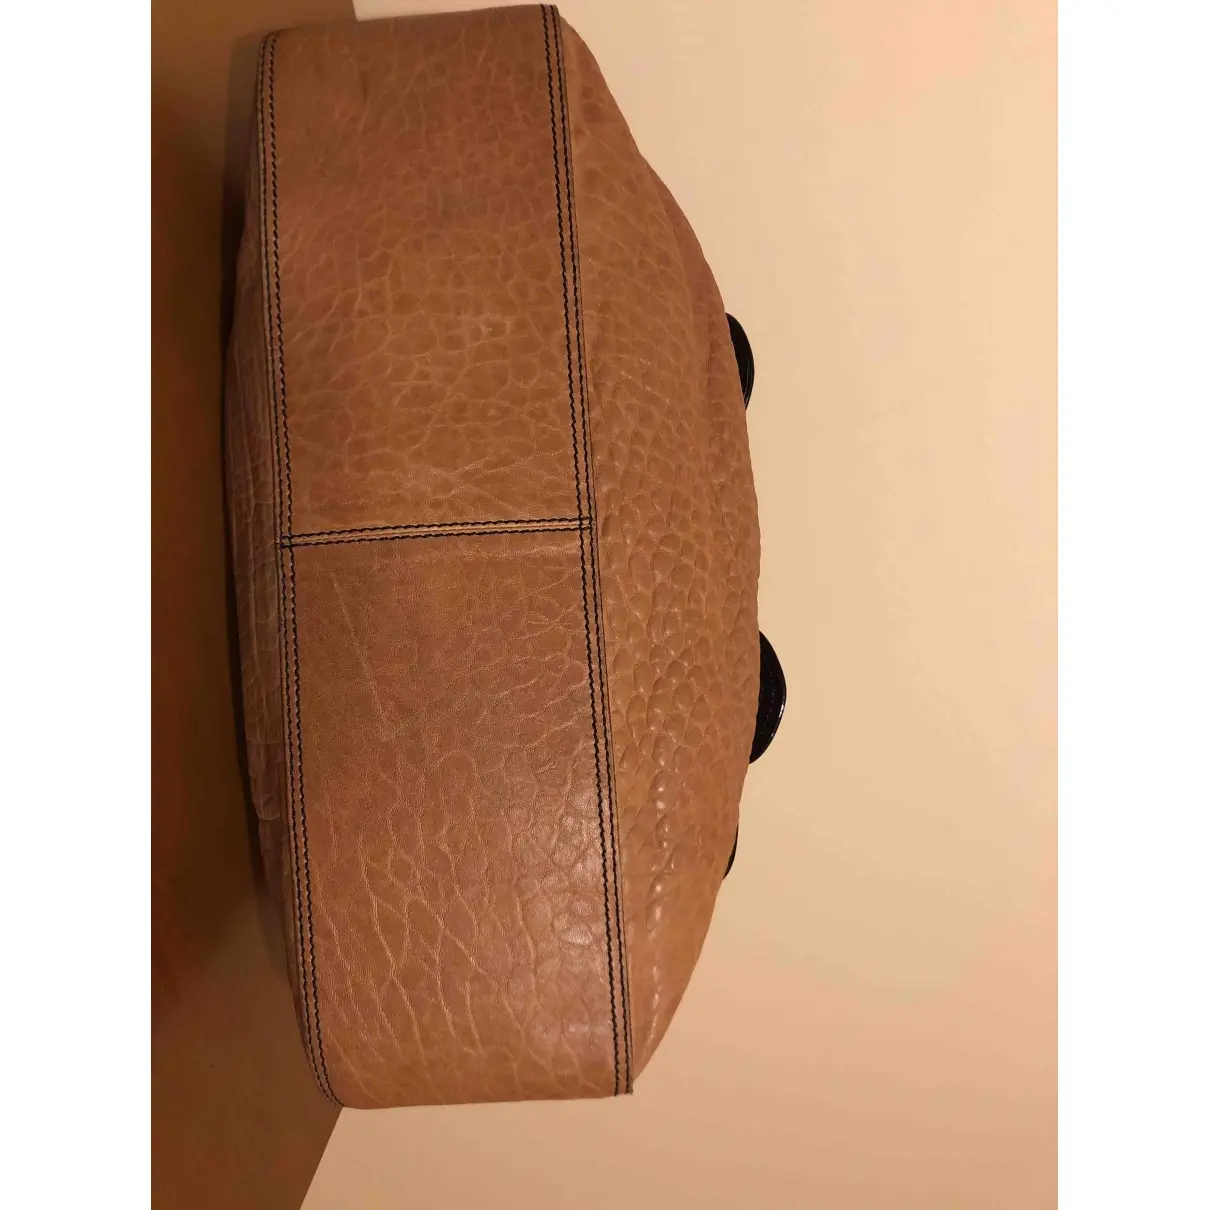 Fendi Bag leather handbag for sale